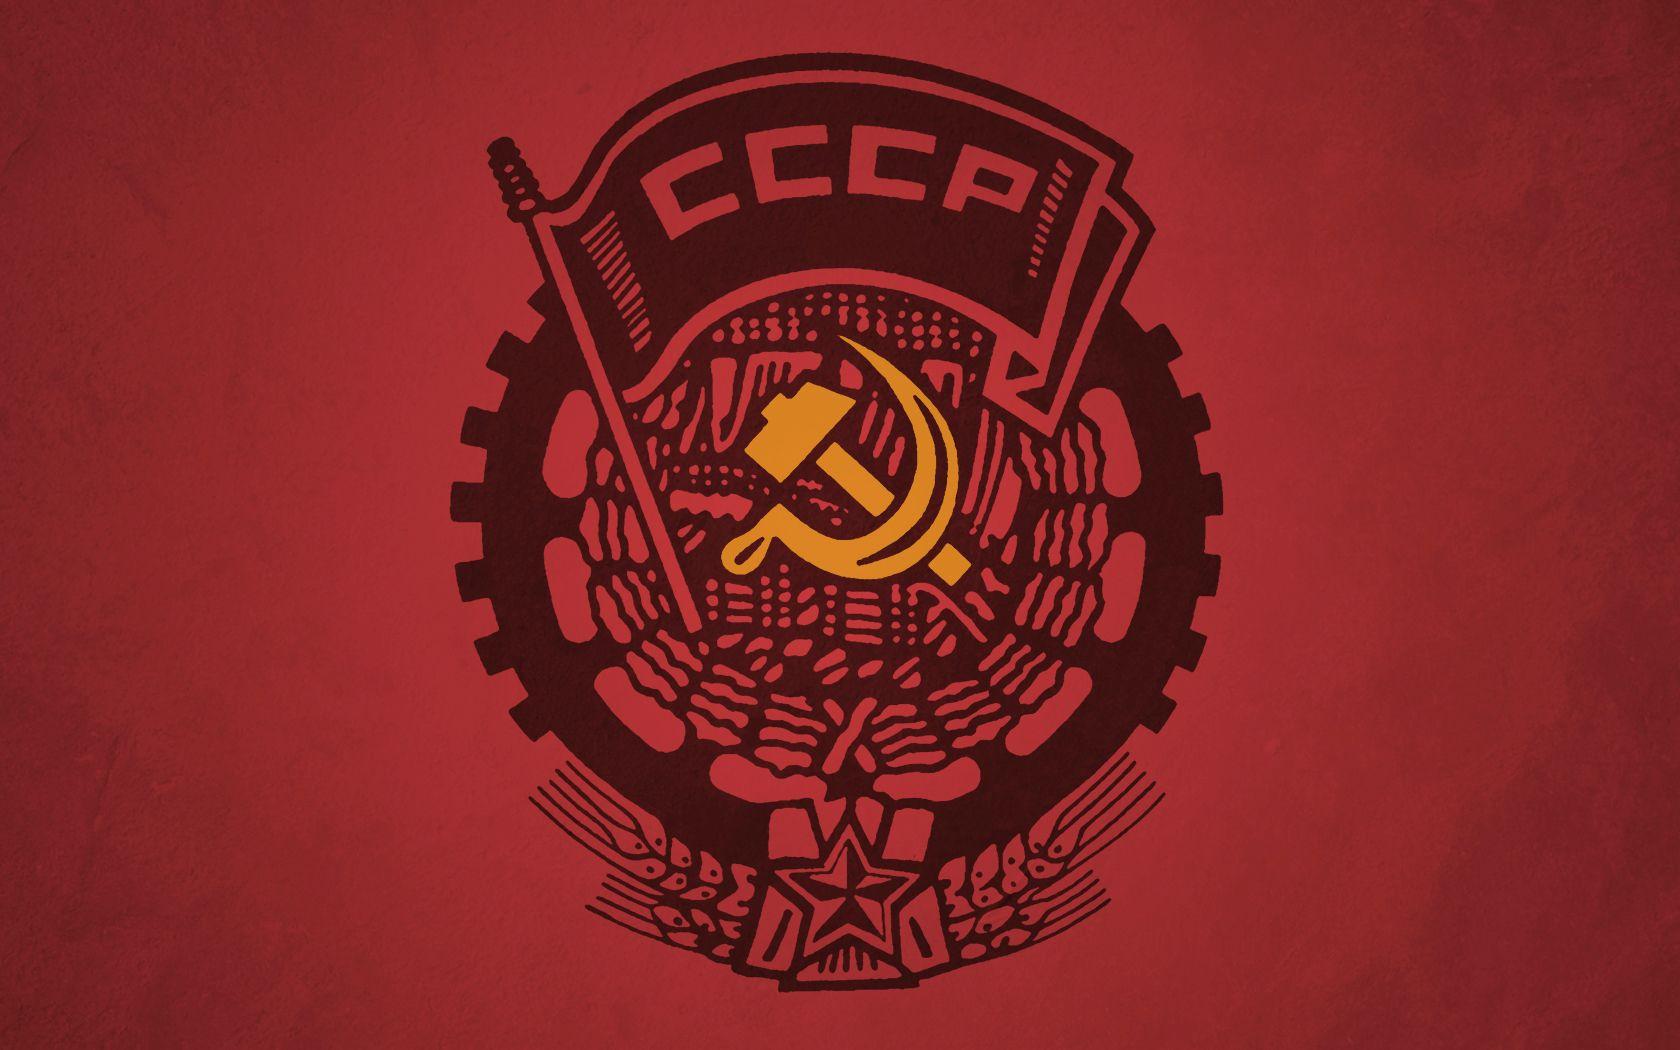 CCCP Logo - Cccp Logo HD Wallpaper, Background Image